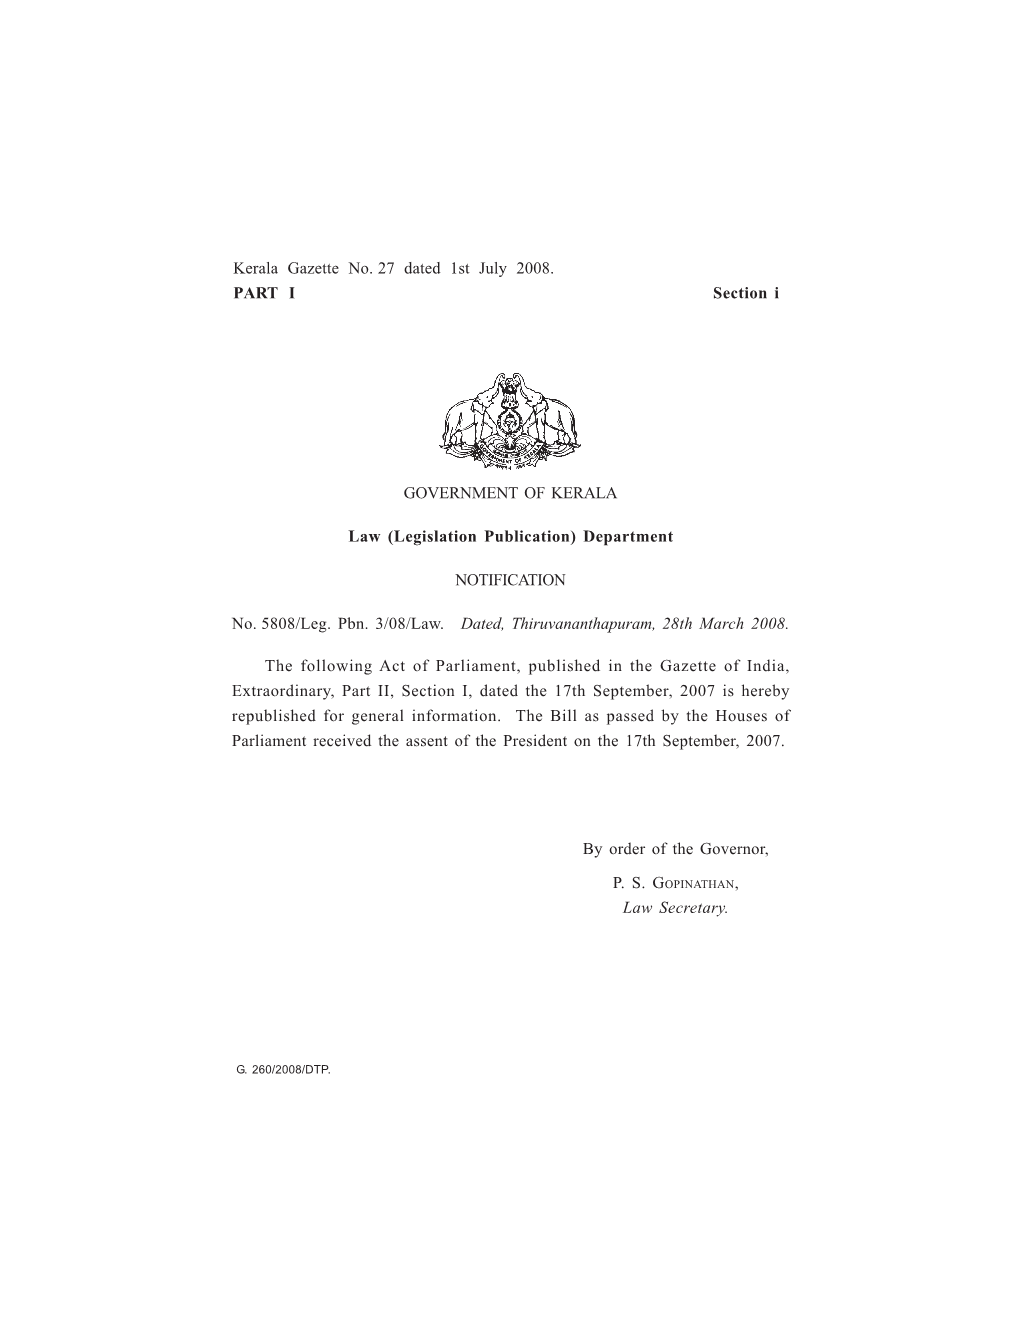 GOVERNMENT of KERALA Law (Legislation Publication